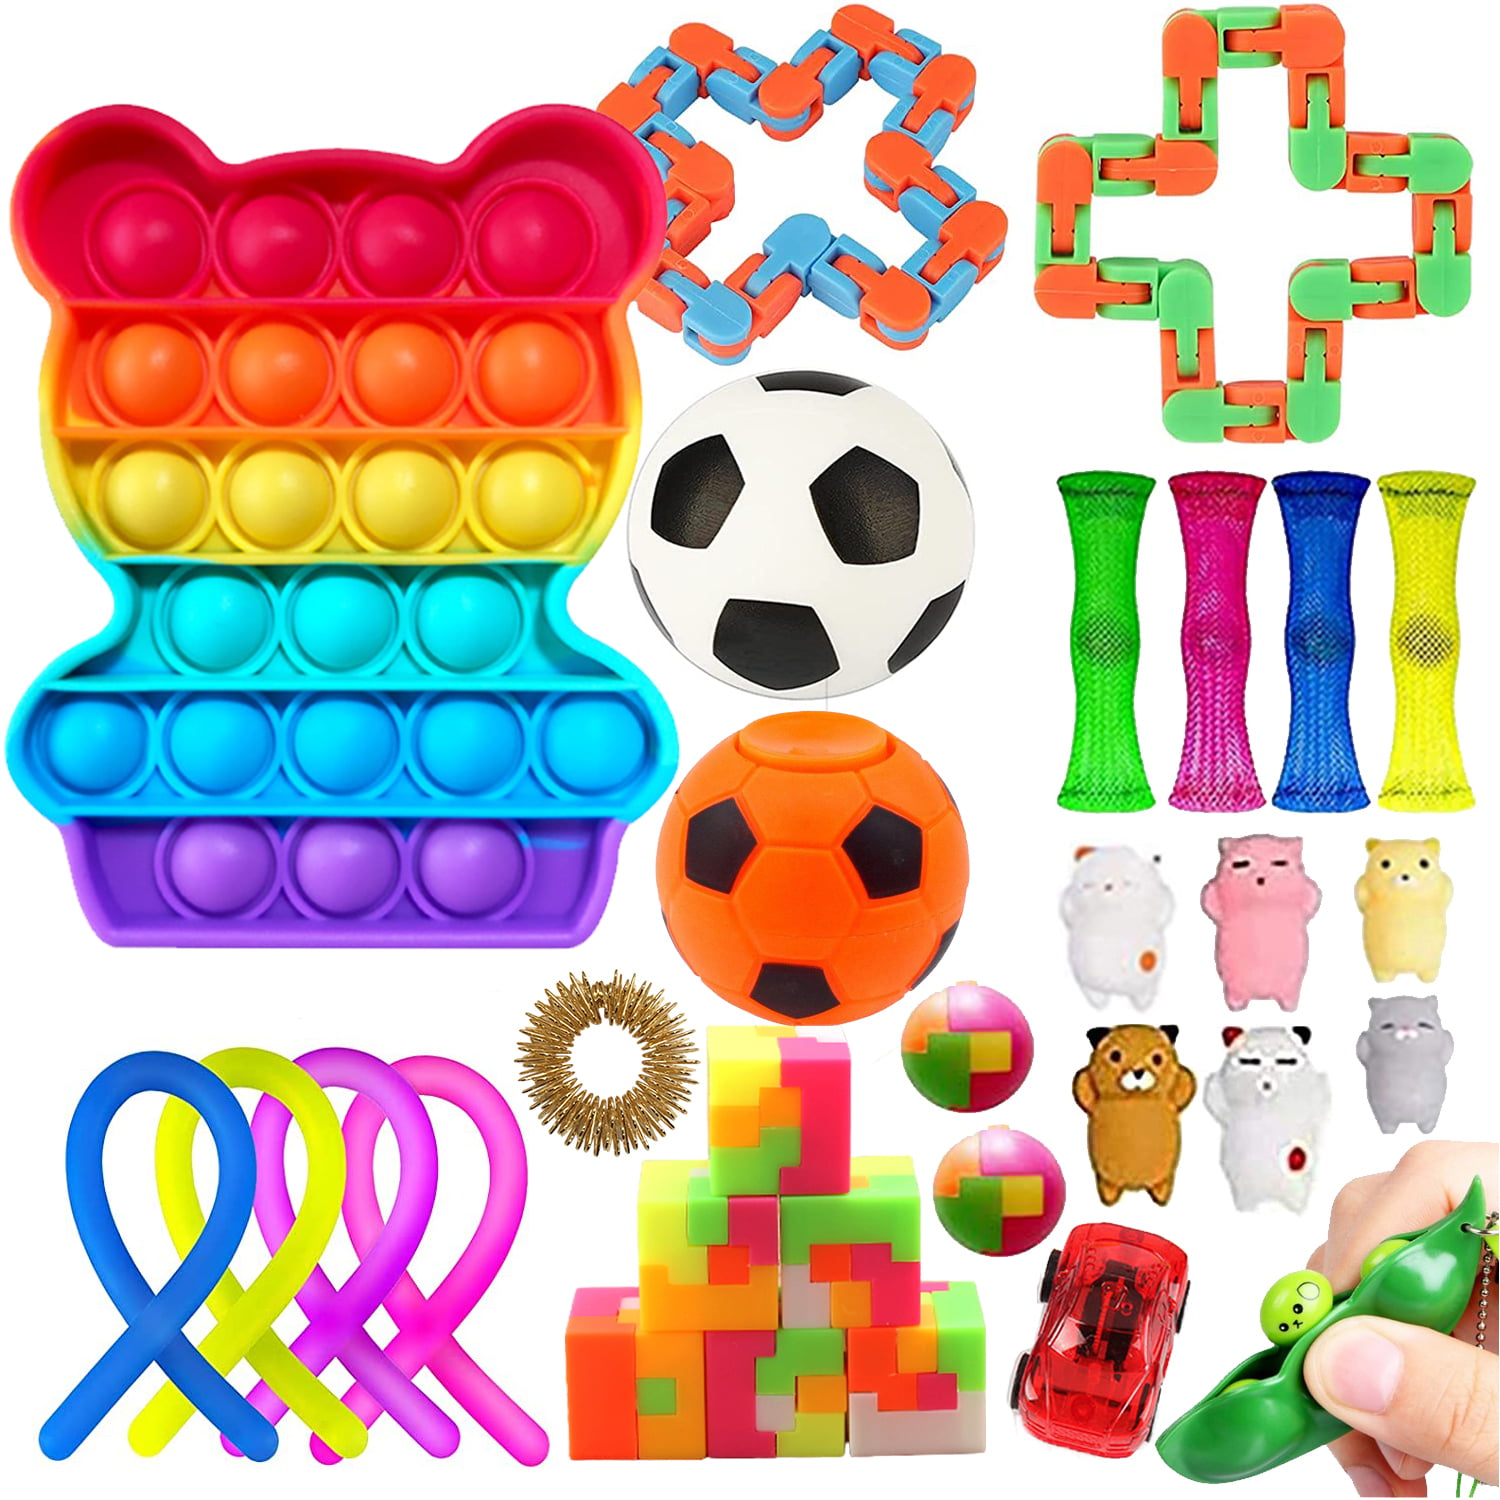 Details about   Fidget Pad Toy Cube Children Desk Fidget Toys Adults Stress Relief ADHD Kid Gift 